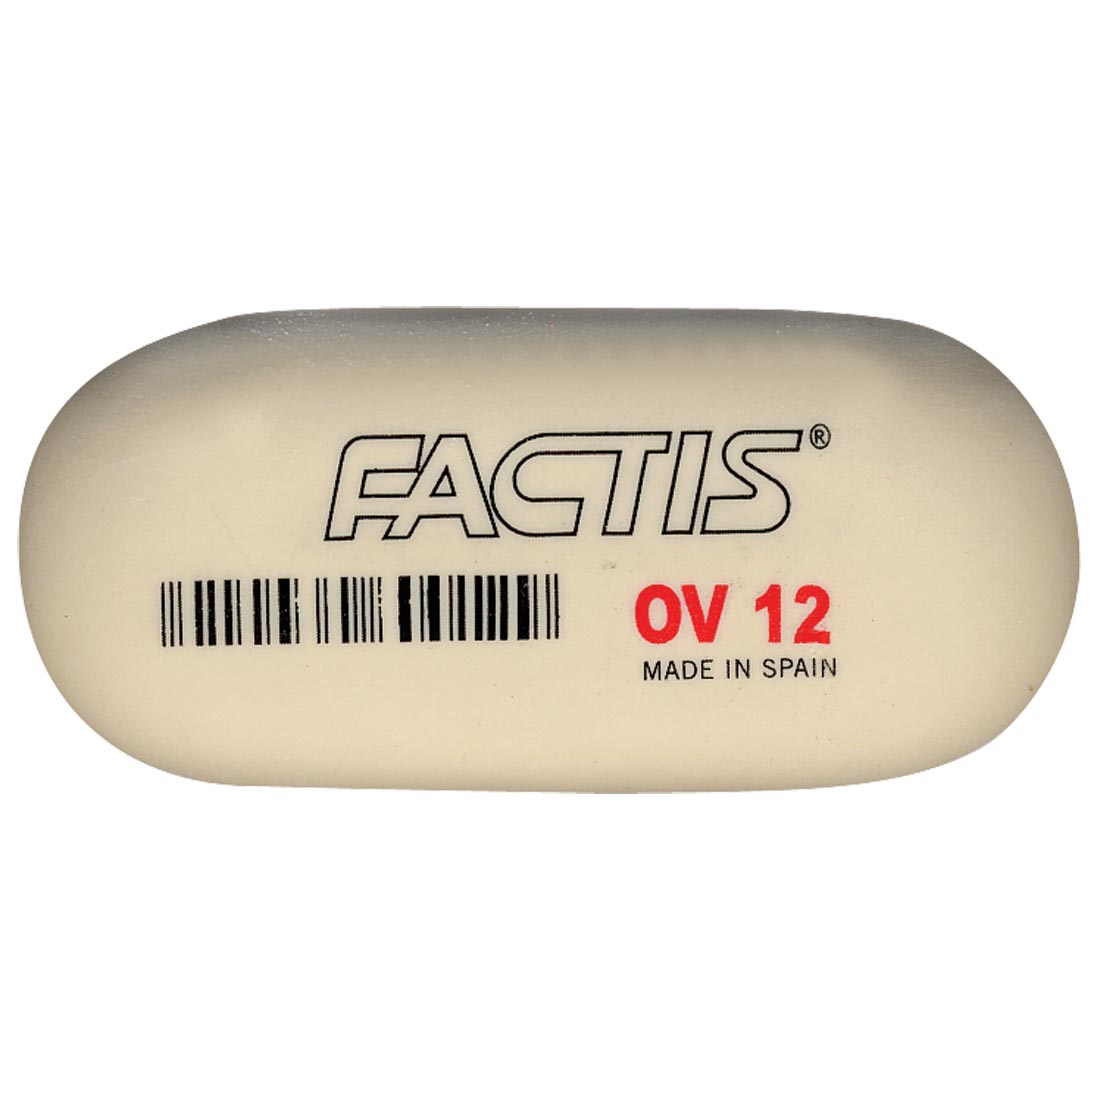 General's Factis Oval White Soft Eraser